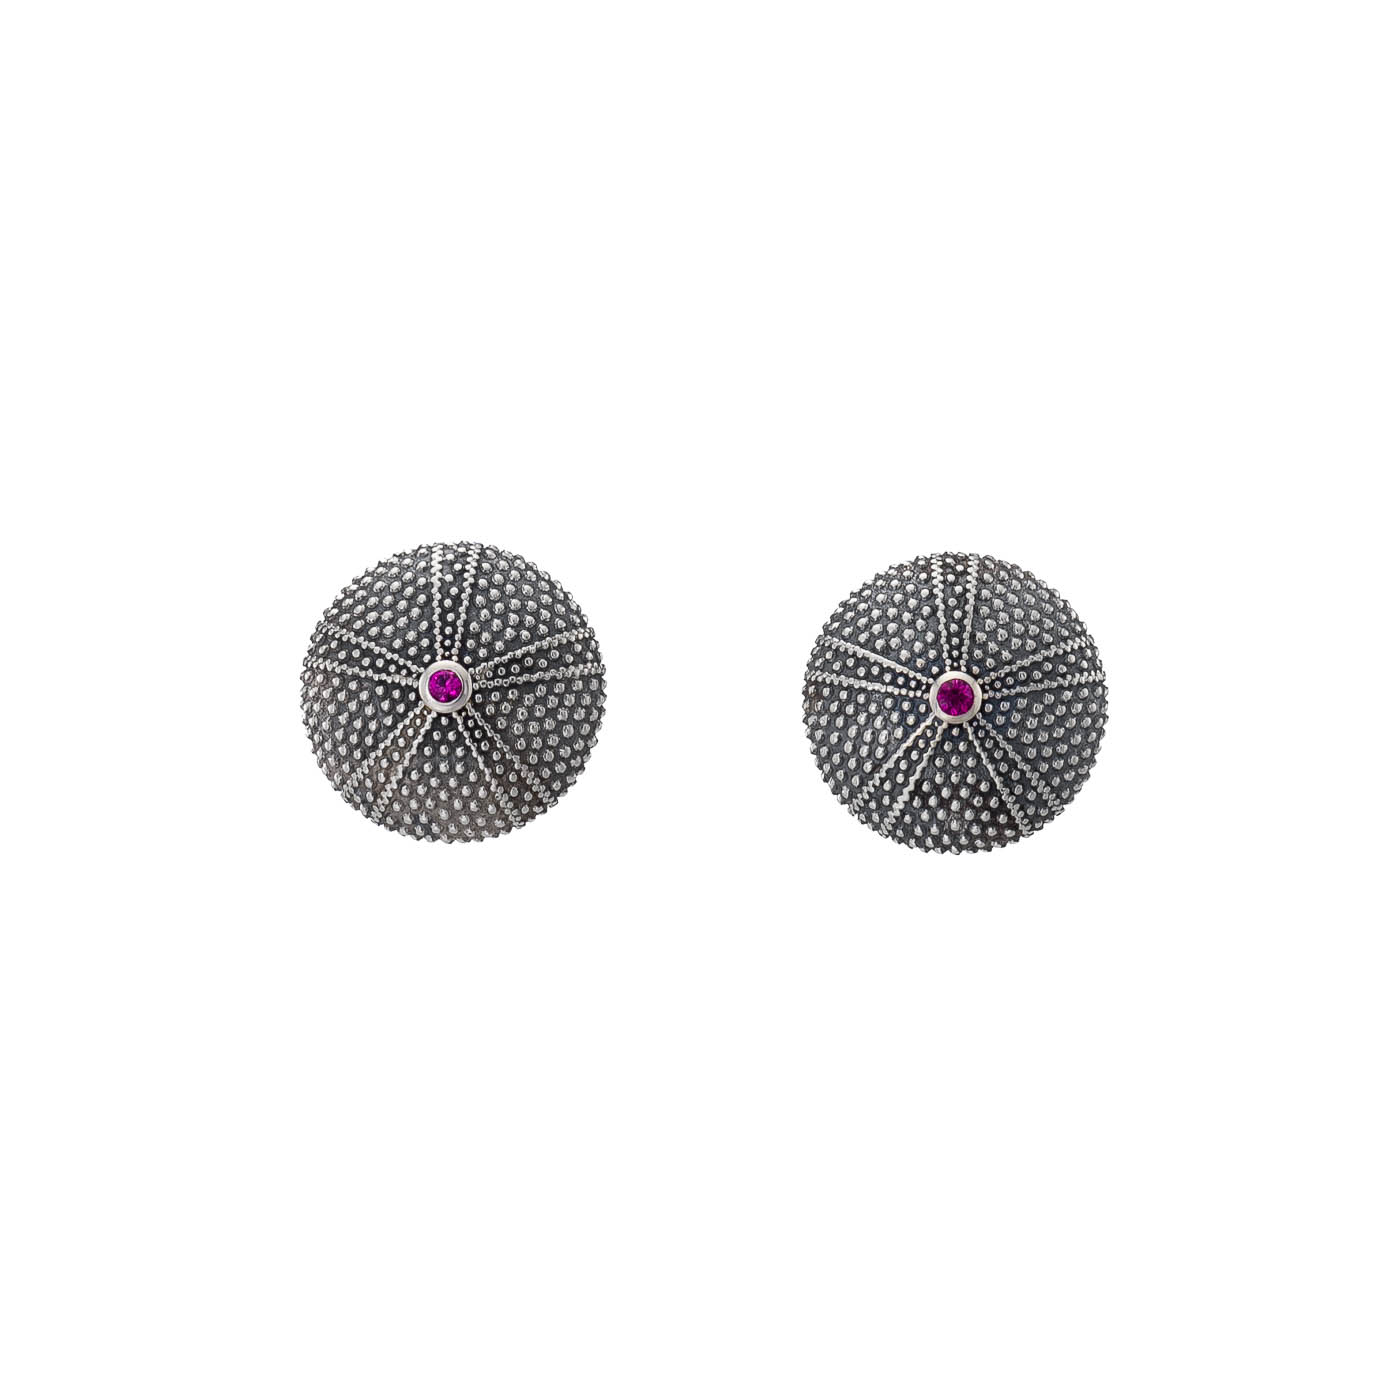 Sea Urchin Stud Earrings in Sterling Silver with Cubic Zirconia